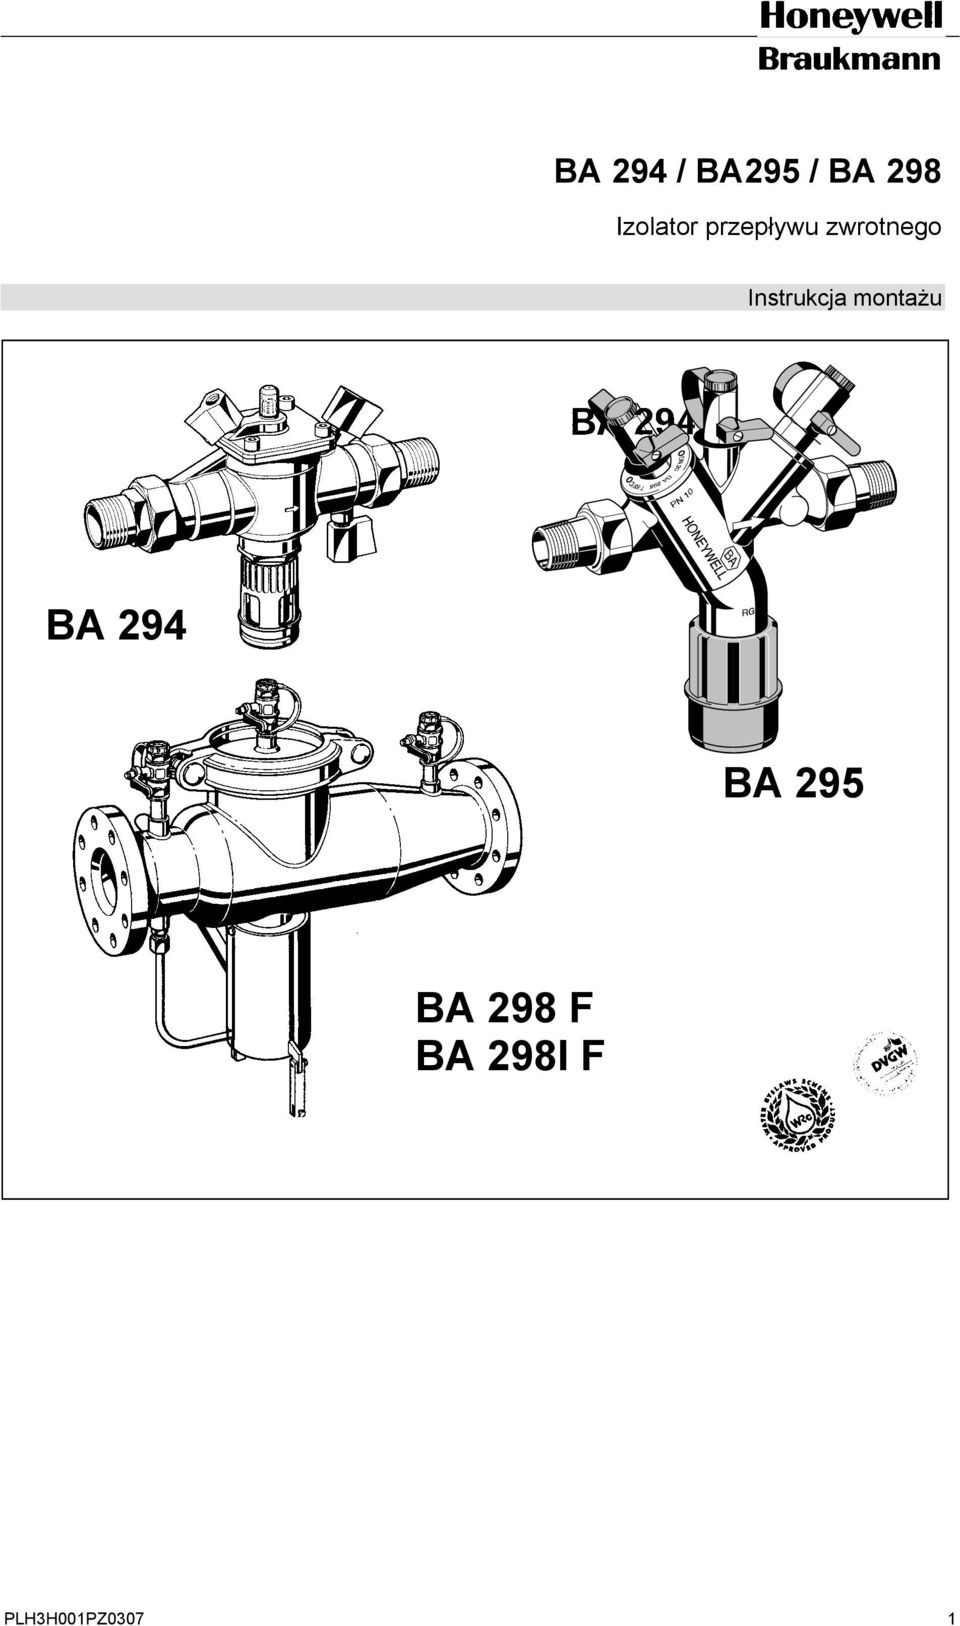 Instrukcja montażu D T BA 294 BA